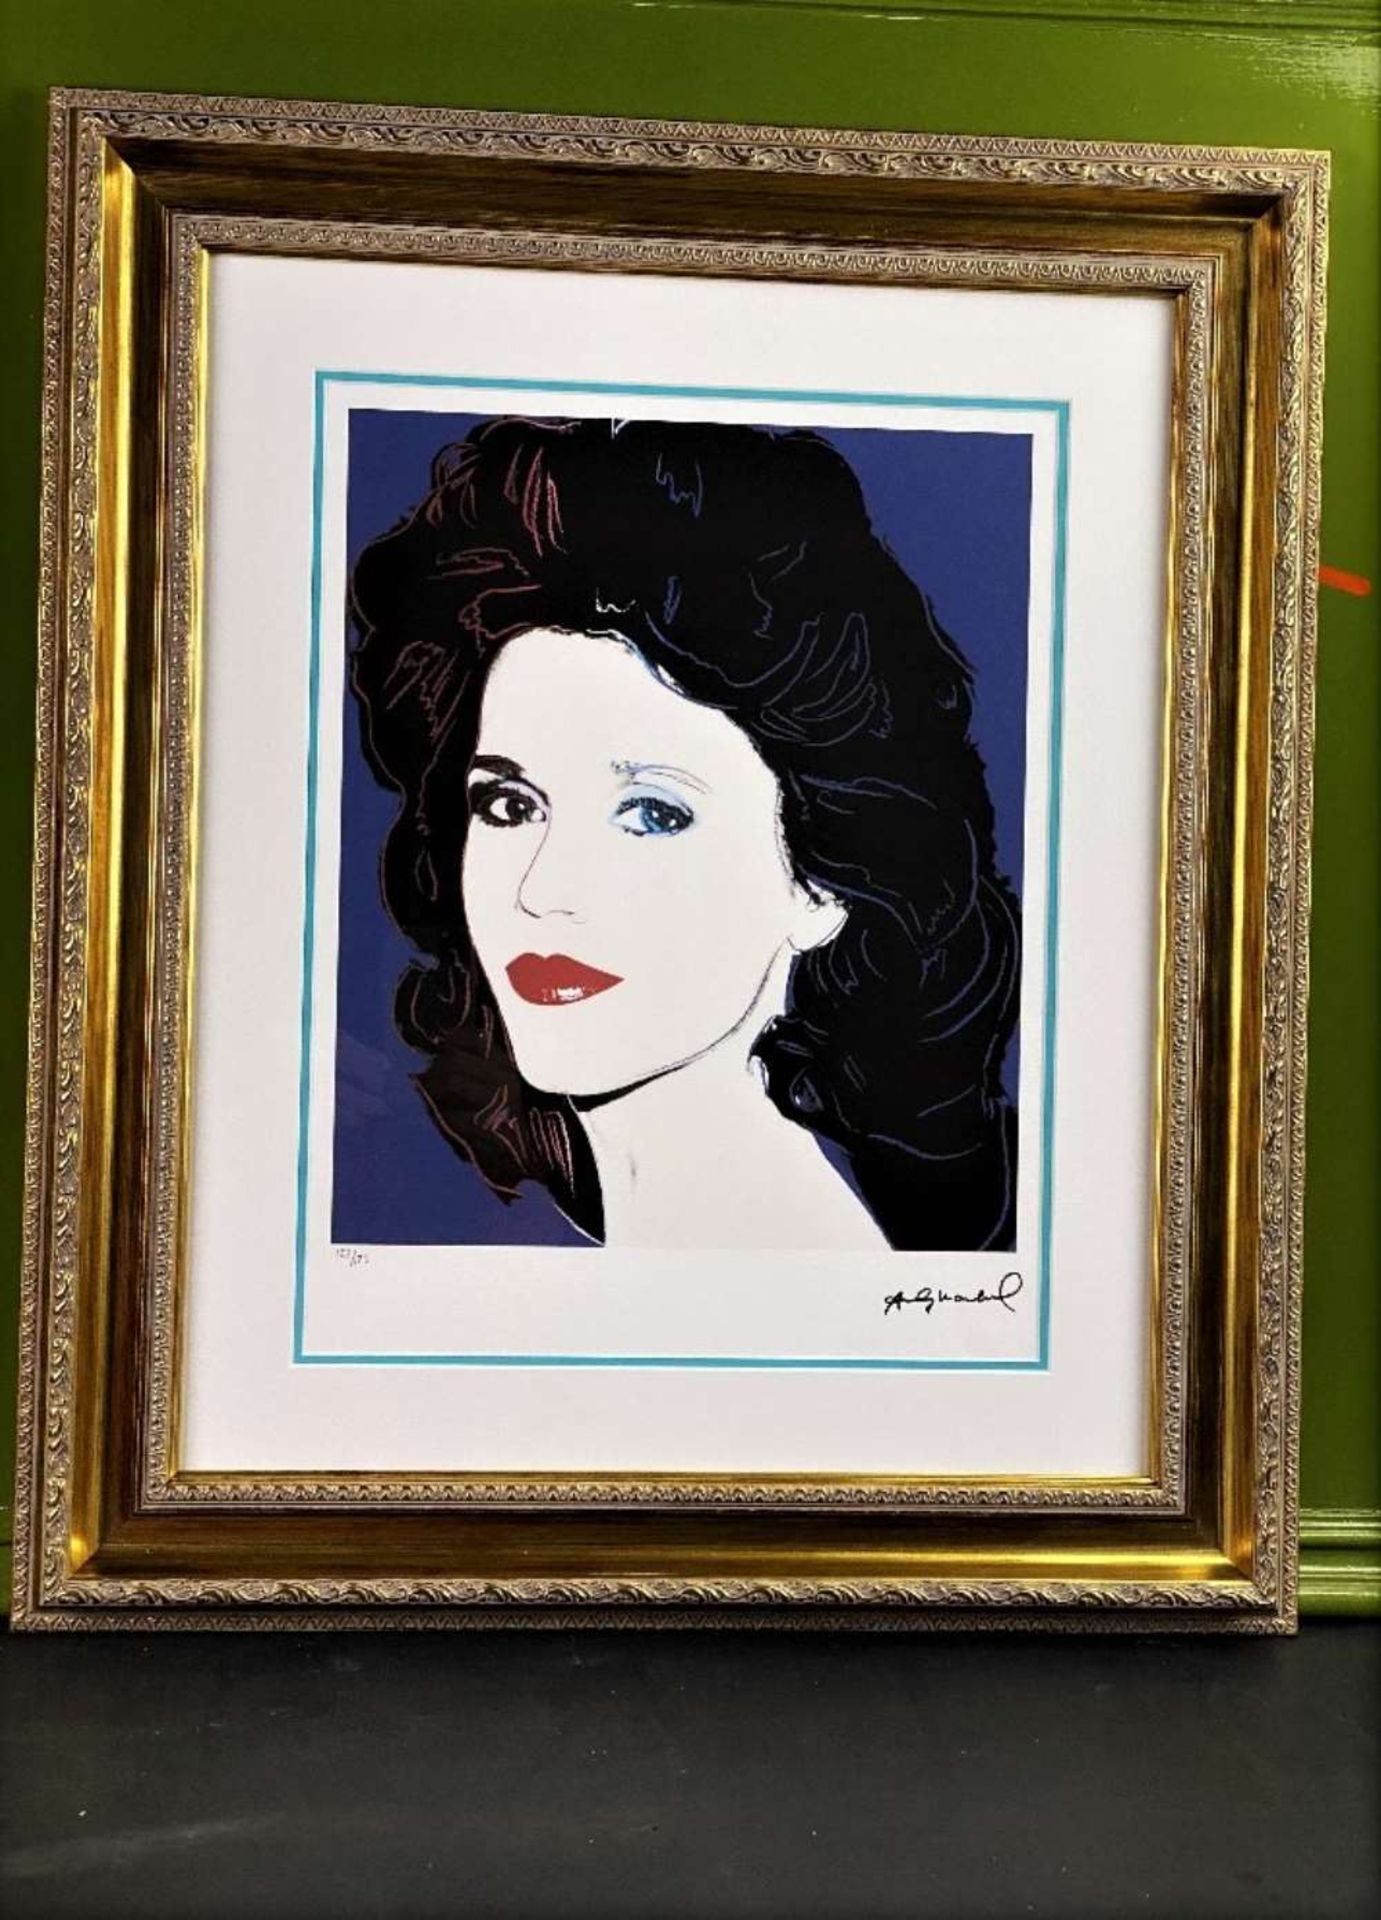 Andy Warhol (1928-1987) “Jane Fonda” Ltd Edition Lithograph - Image 6 of 6